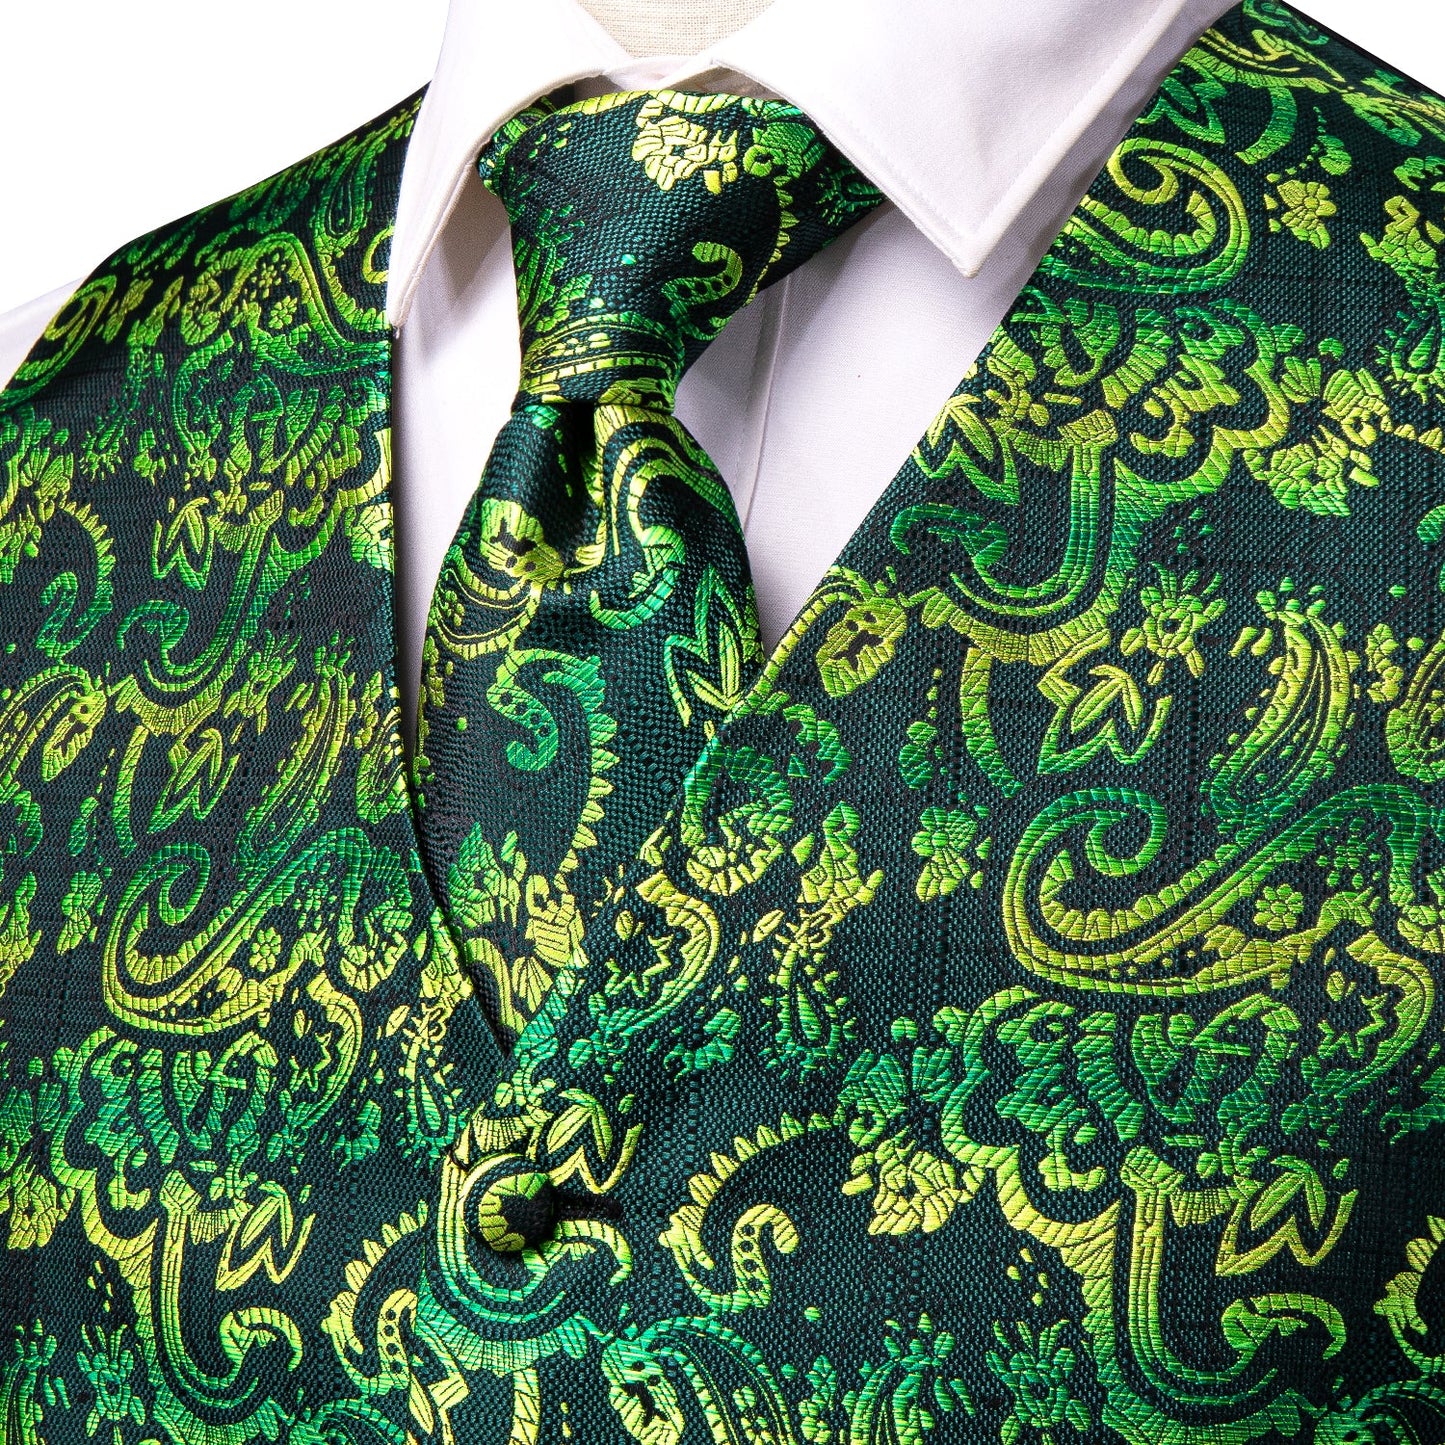 Designer Floral Waistcoat Silky Novelty Vest Galaxy Green